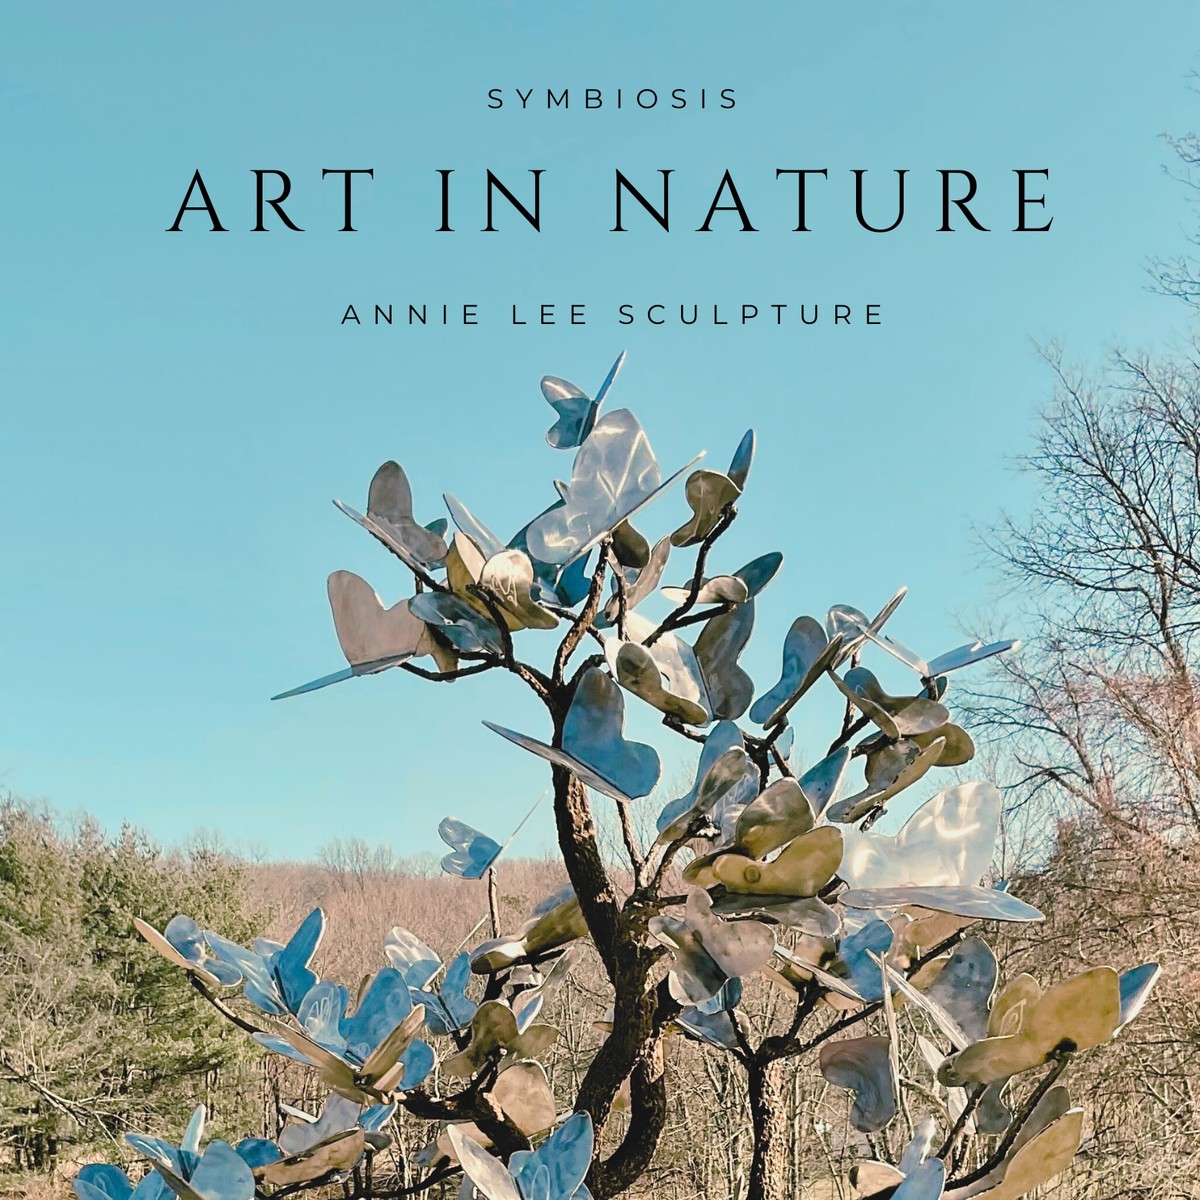 Art in Nature text over a bonsai tree sculpture